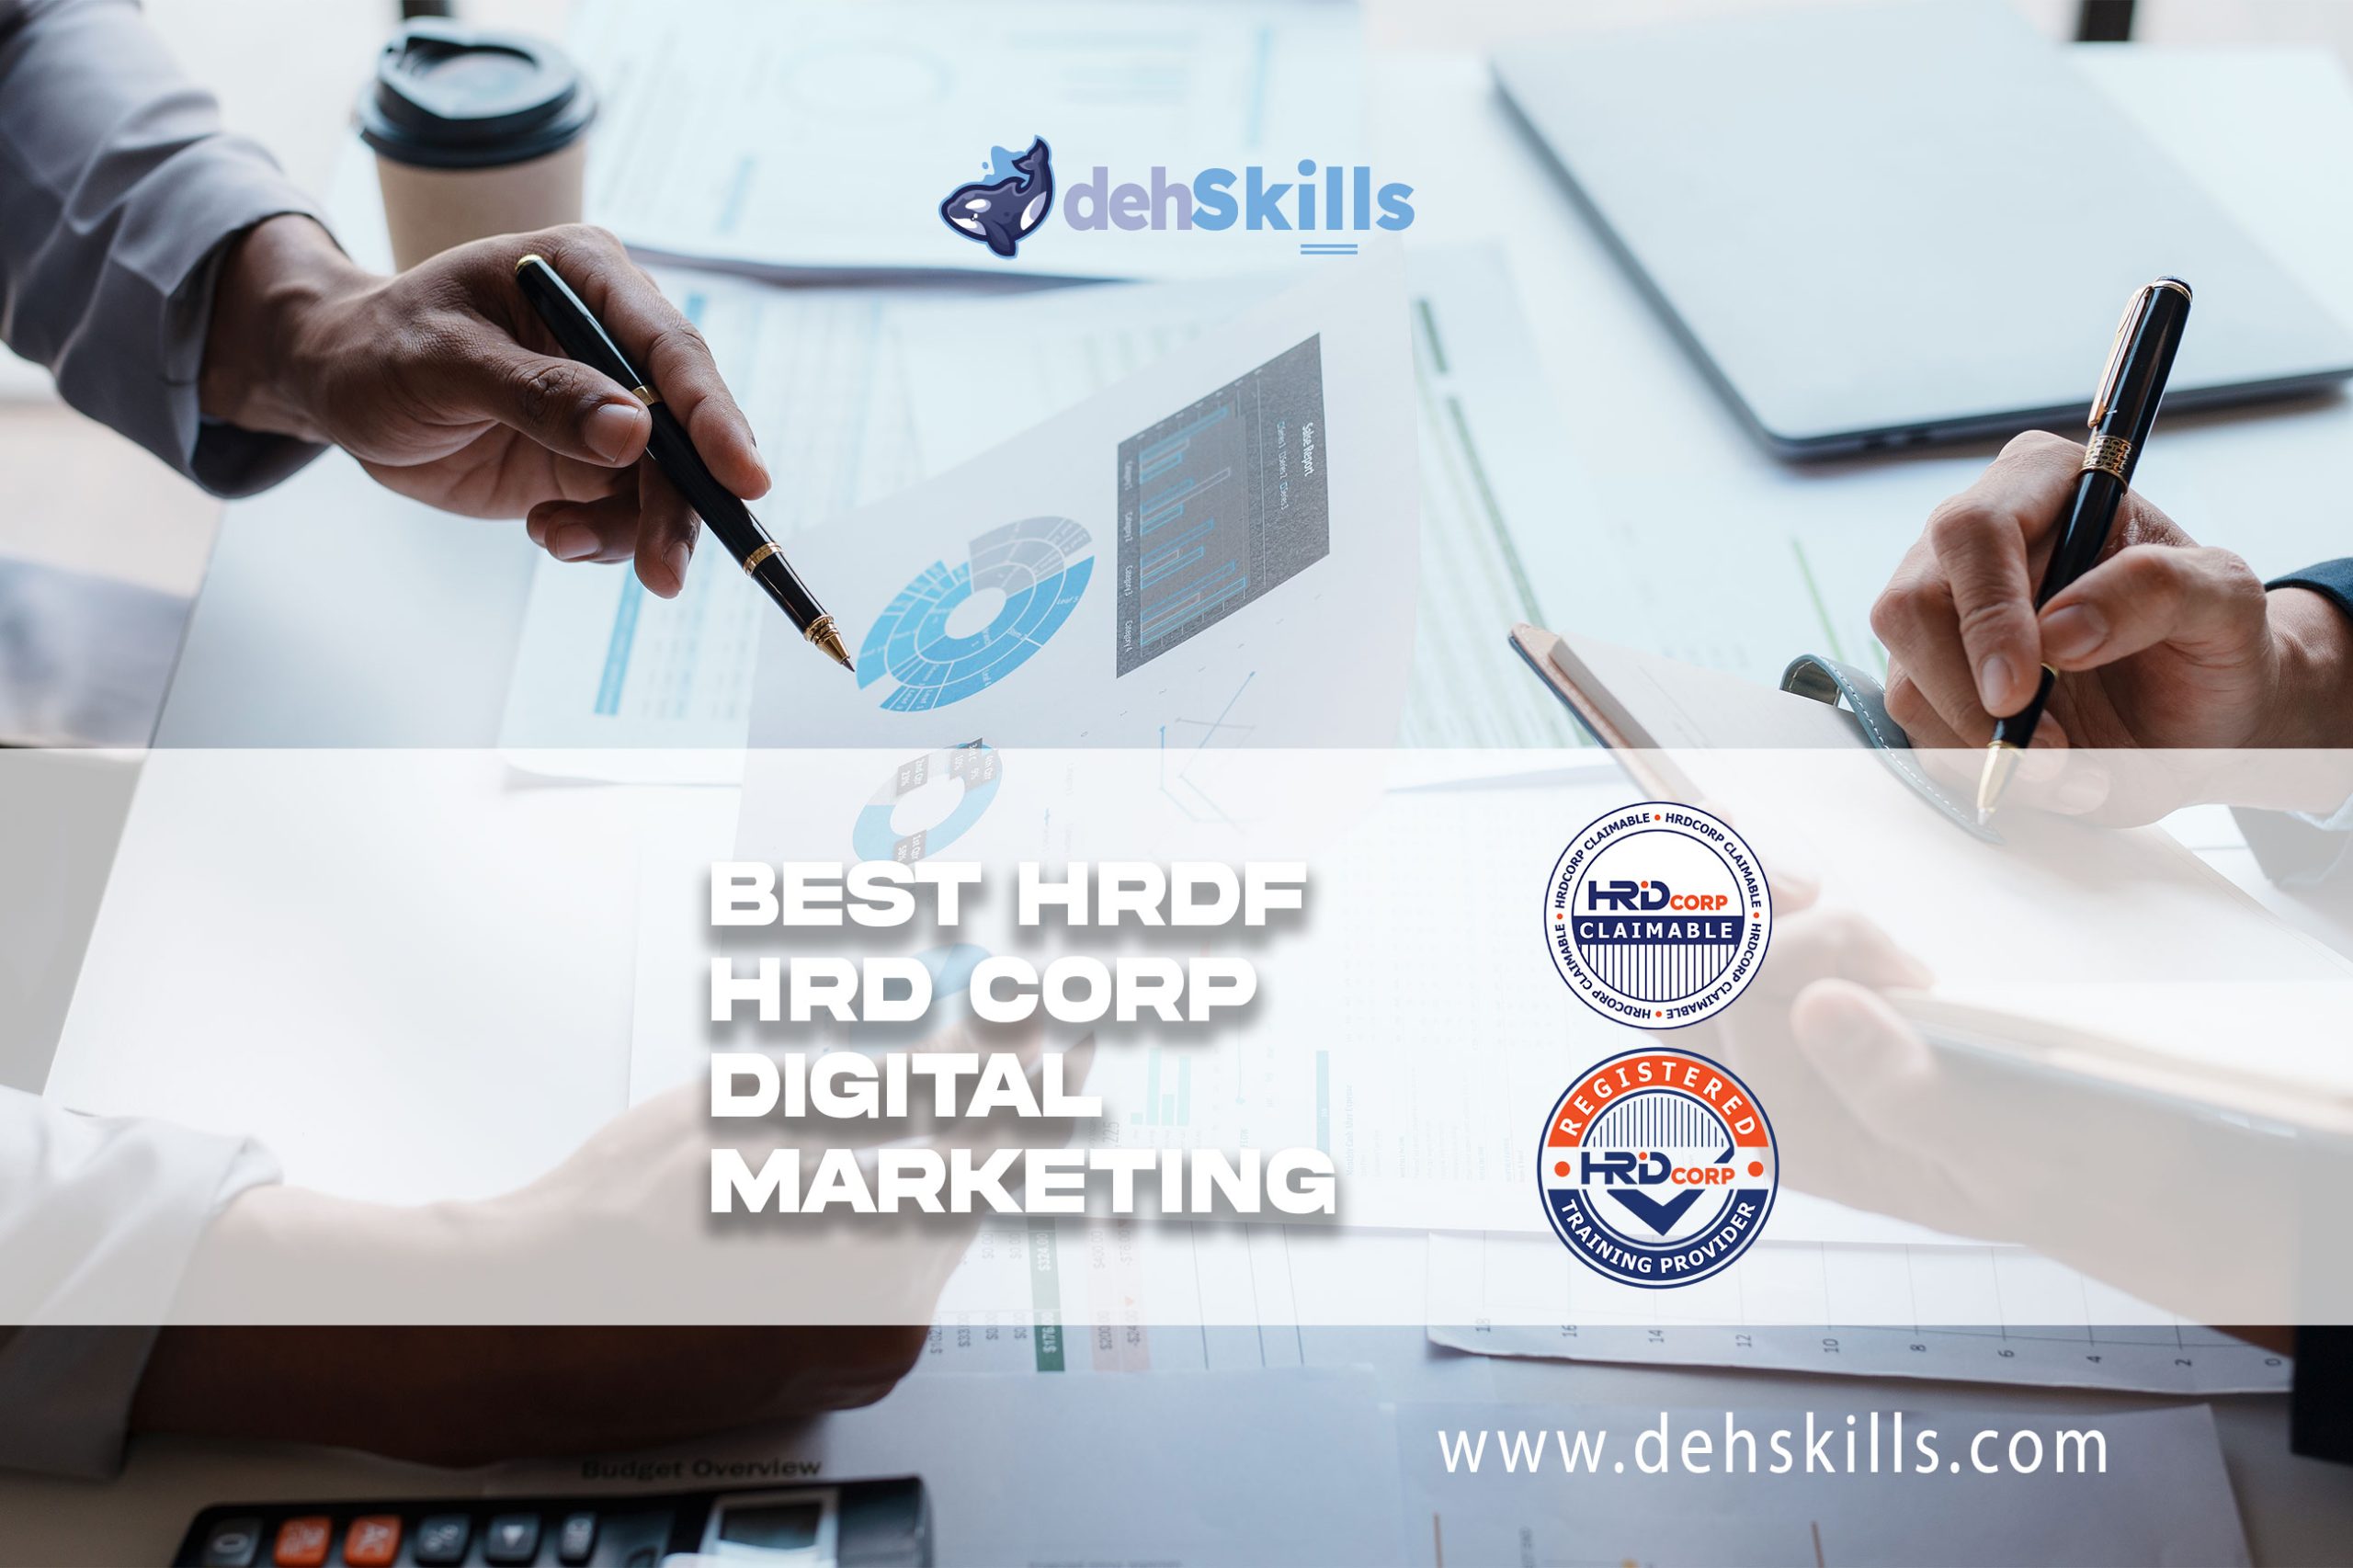 5 Best HRDF - HRD Corp Digital Marketing Courses